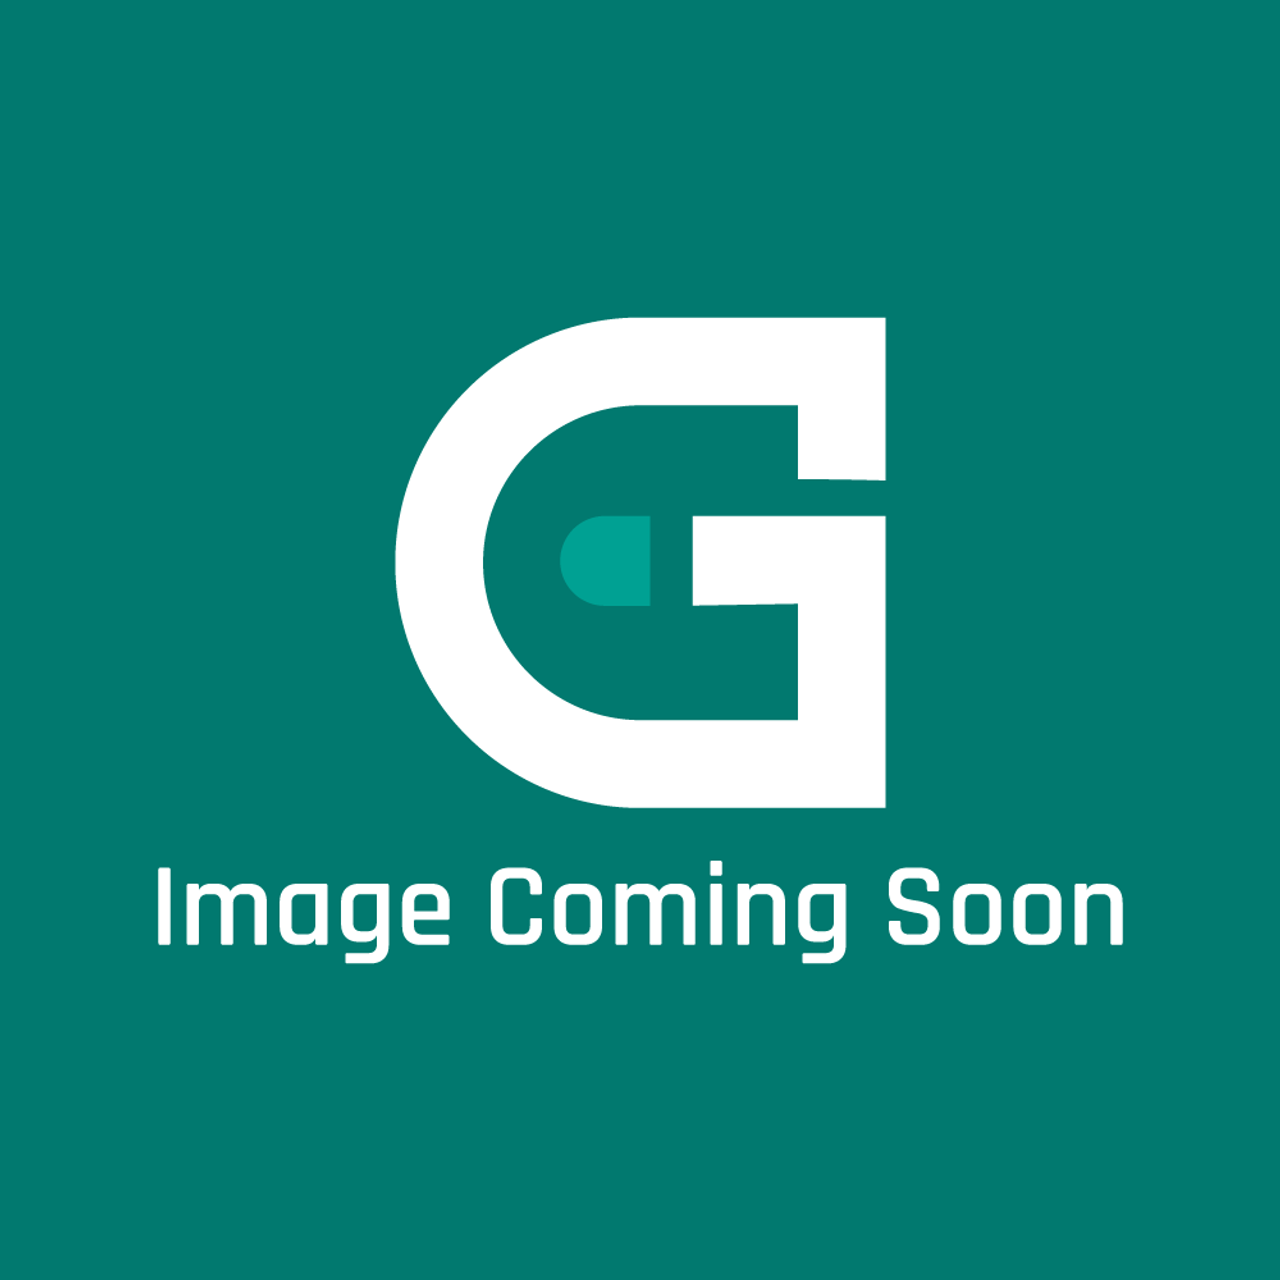 GE Appliances WB36X31629 - Dark Slate Manifold Panel - Image Coming Soon!